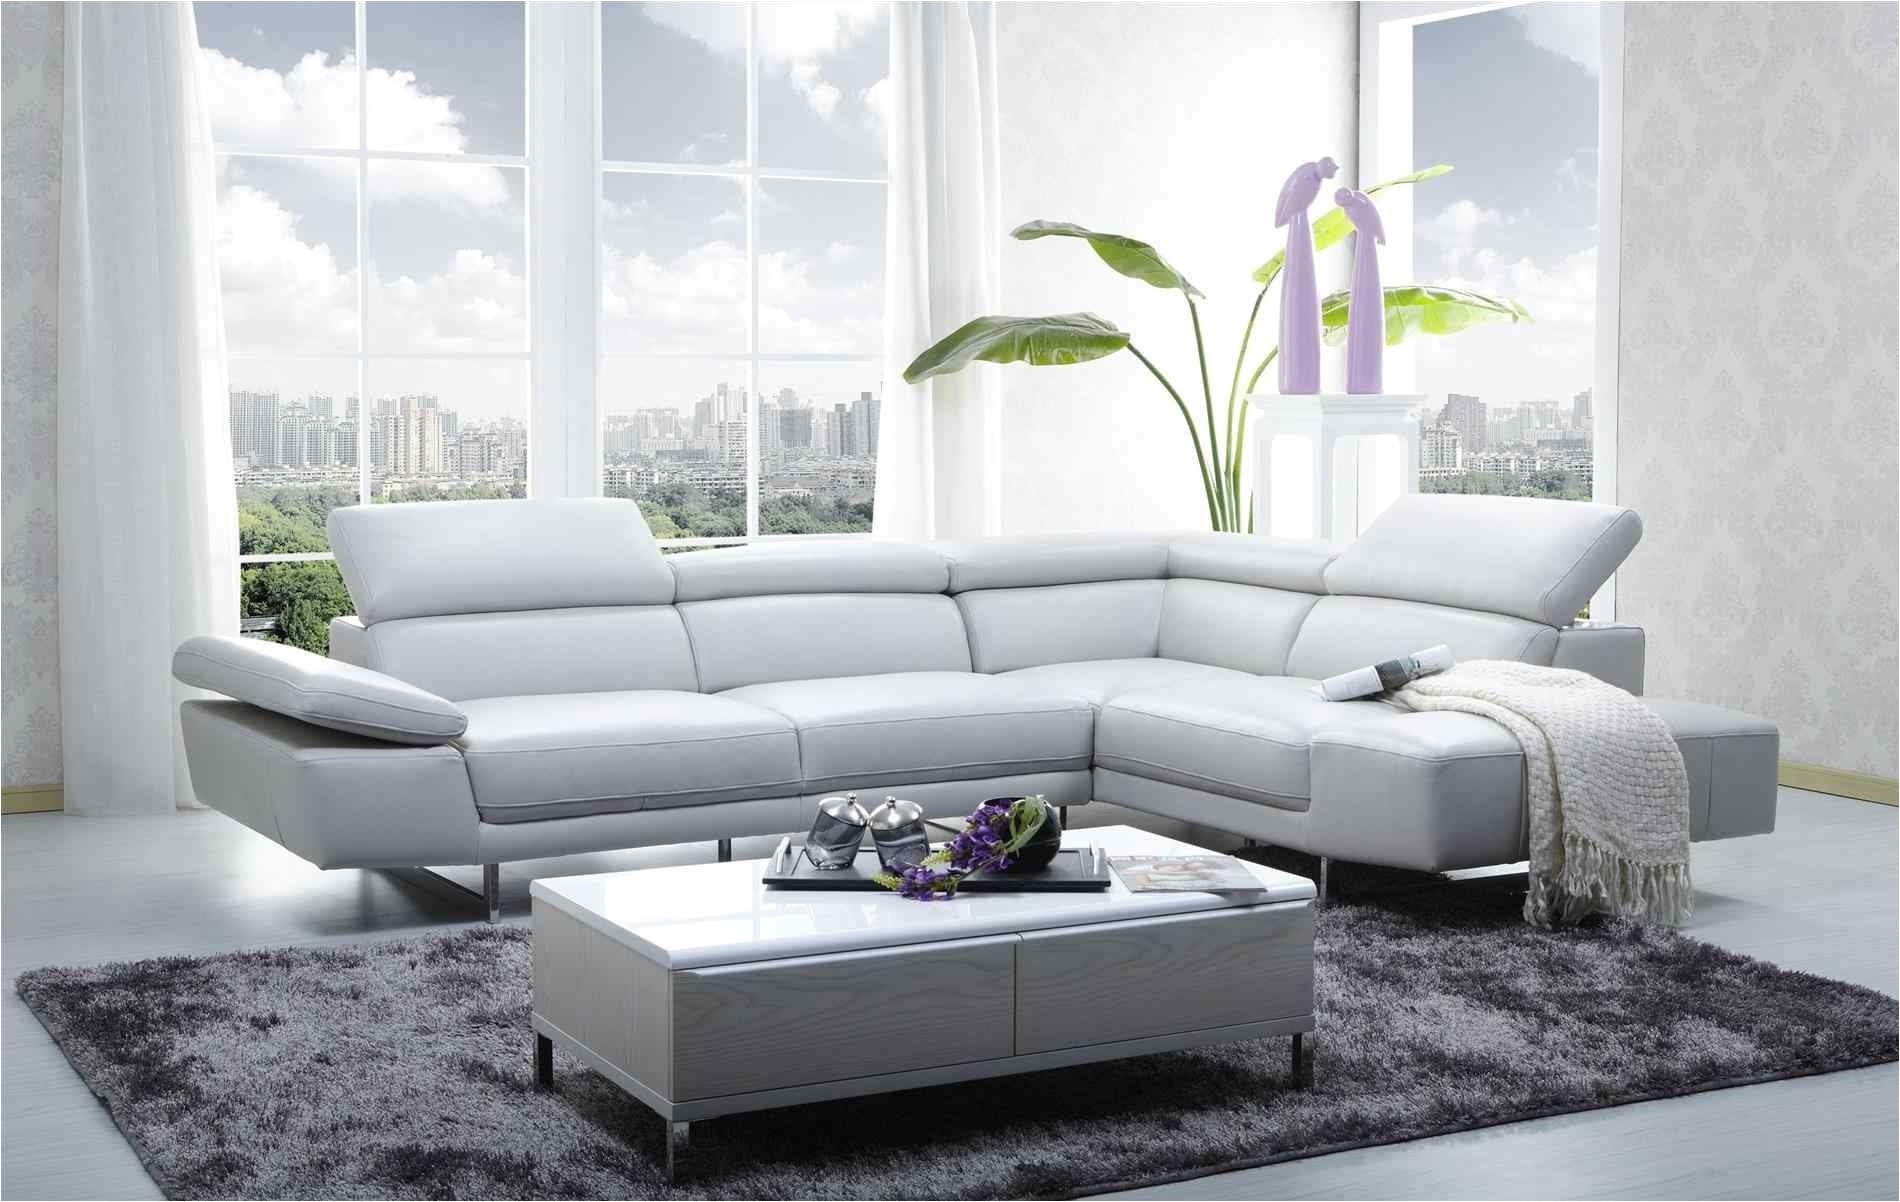 suns furniture tulsa unique 11 best contemporary furniture tulsa ideas for living room